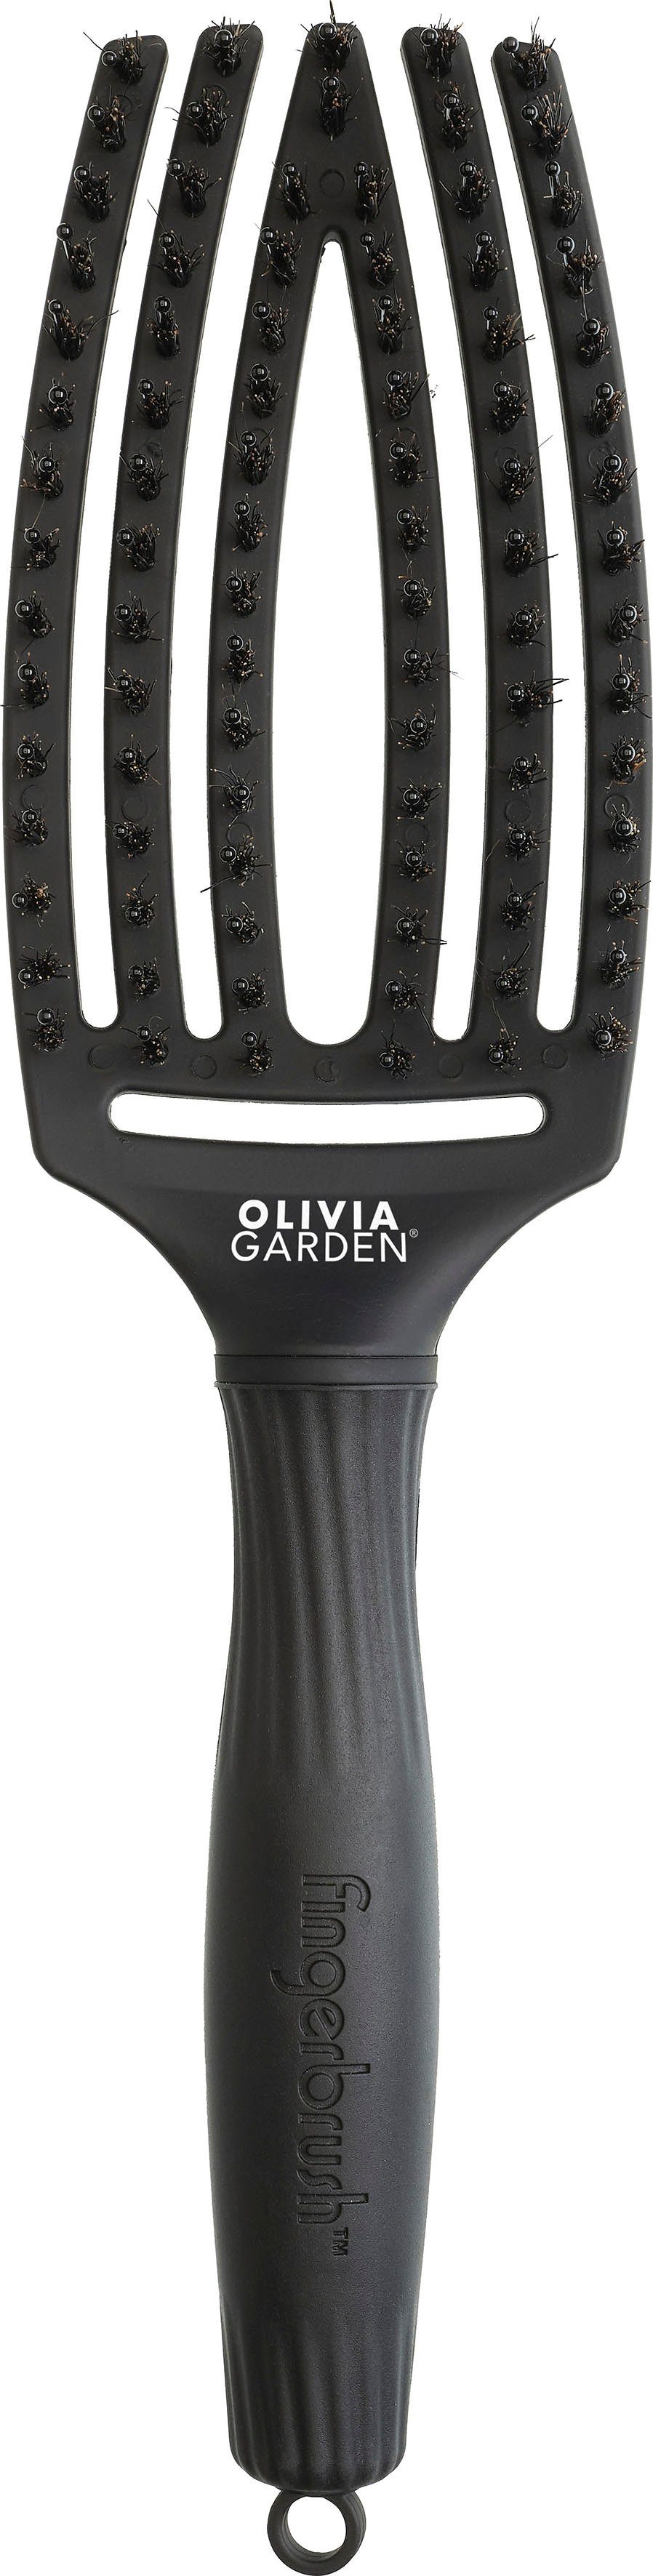 OLIVIA GARDEN Fingerbrush Haarbürste Combo Medium